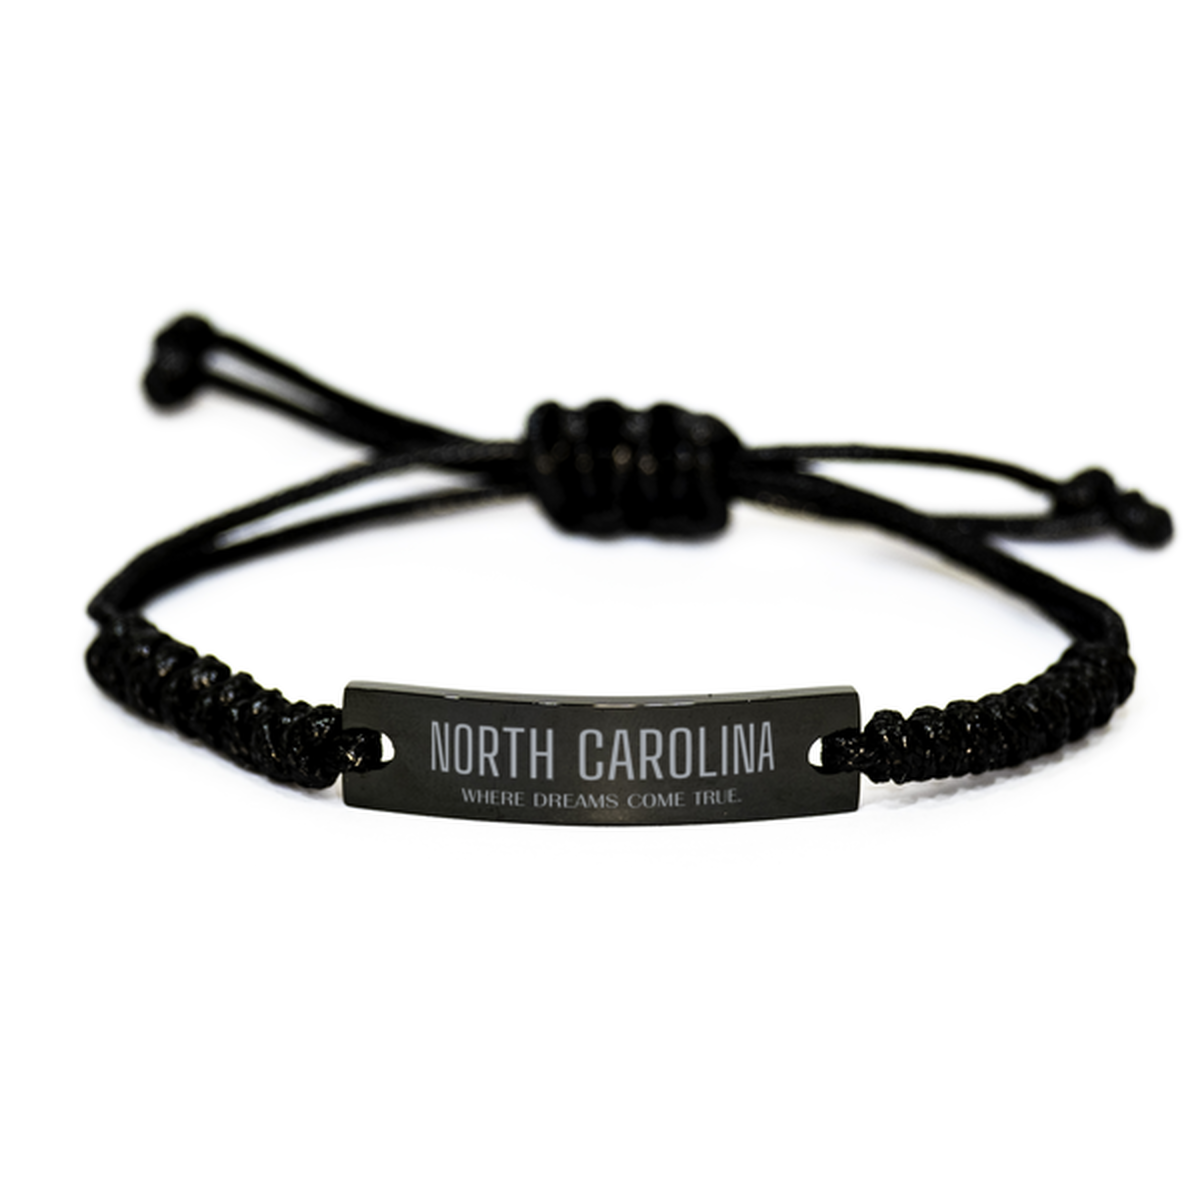 Love North Carolina State Black Rope Bracelet, North Carolina Where dreams come true, Birthday Inspirational Gifts For North Carolina Men, Women, Friends